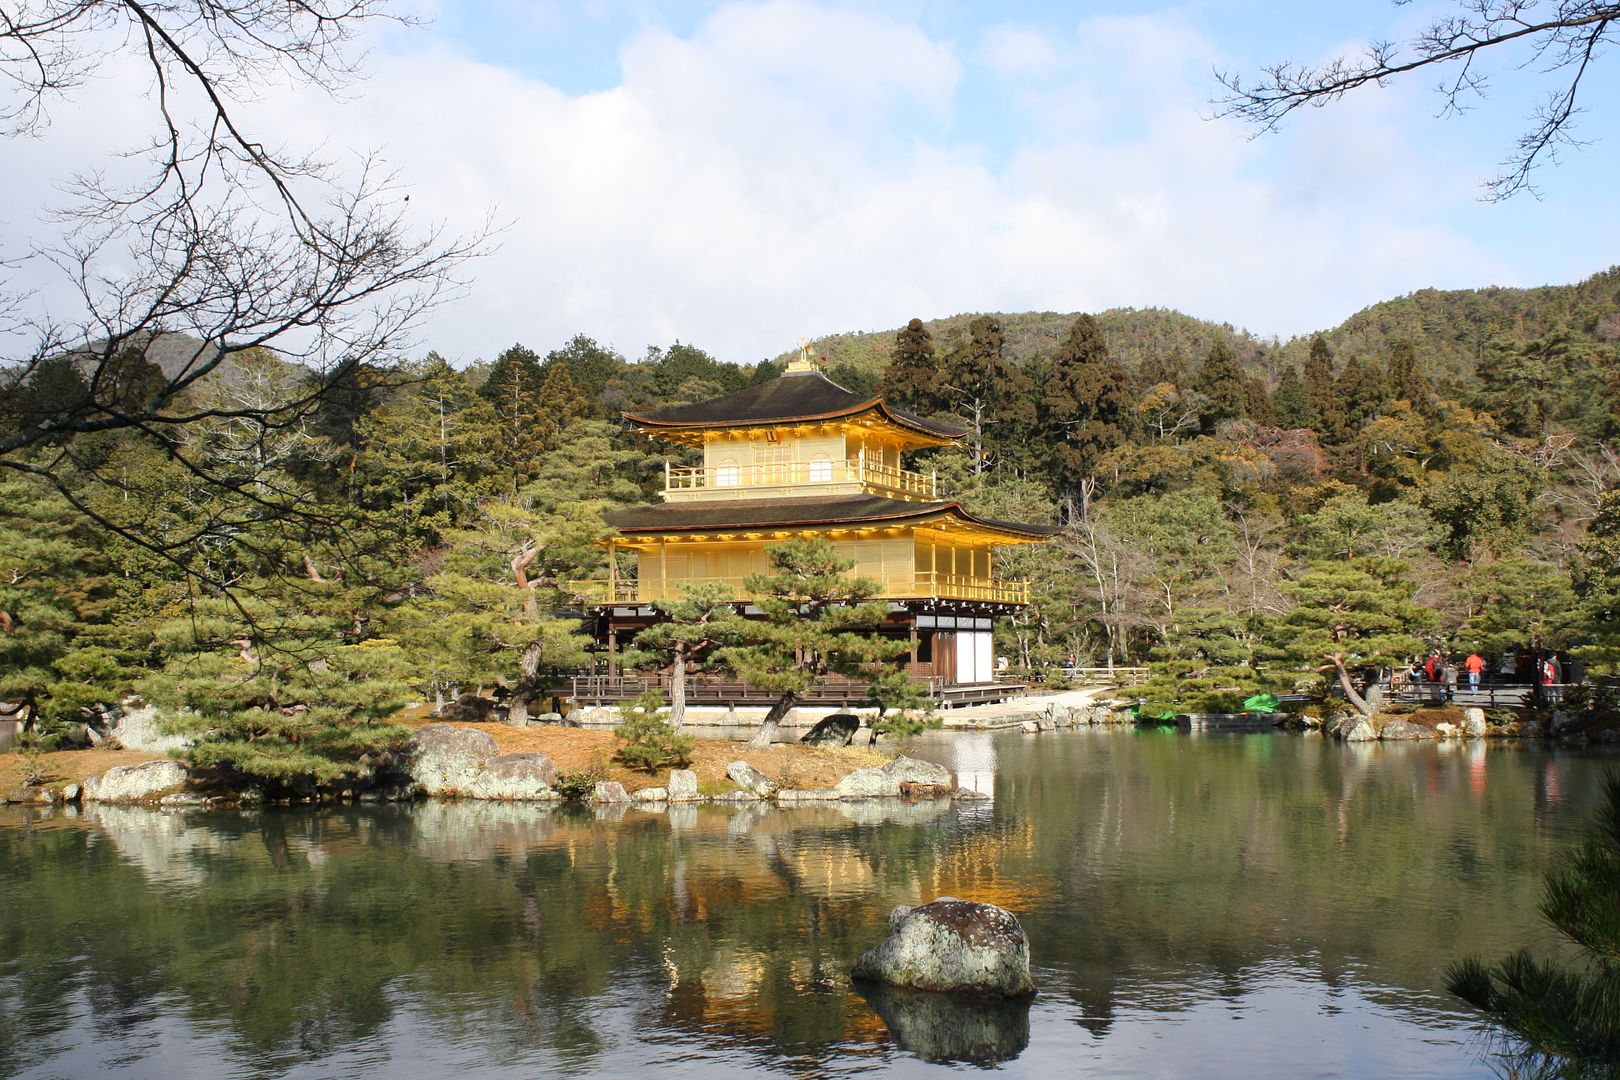 Golden Pavilion in Kyoto, Japan photo 2013-12-22175535_zpscd6da5eb.jpg